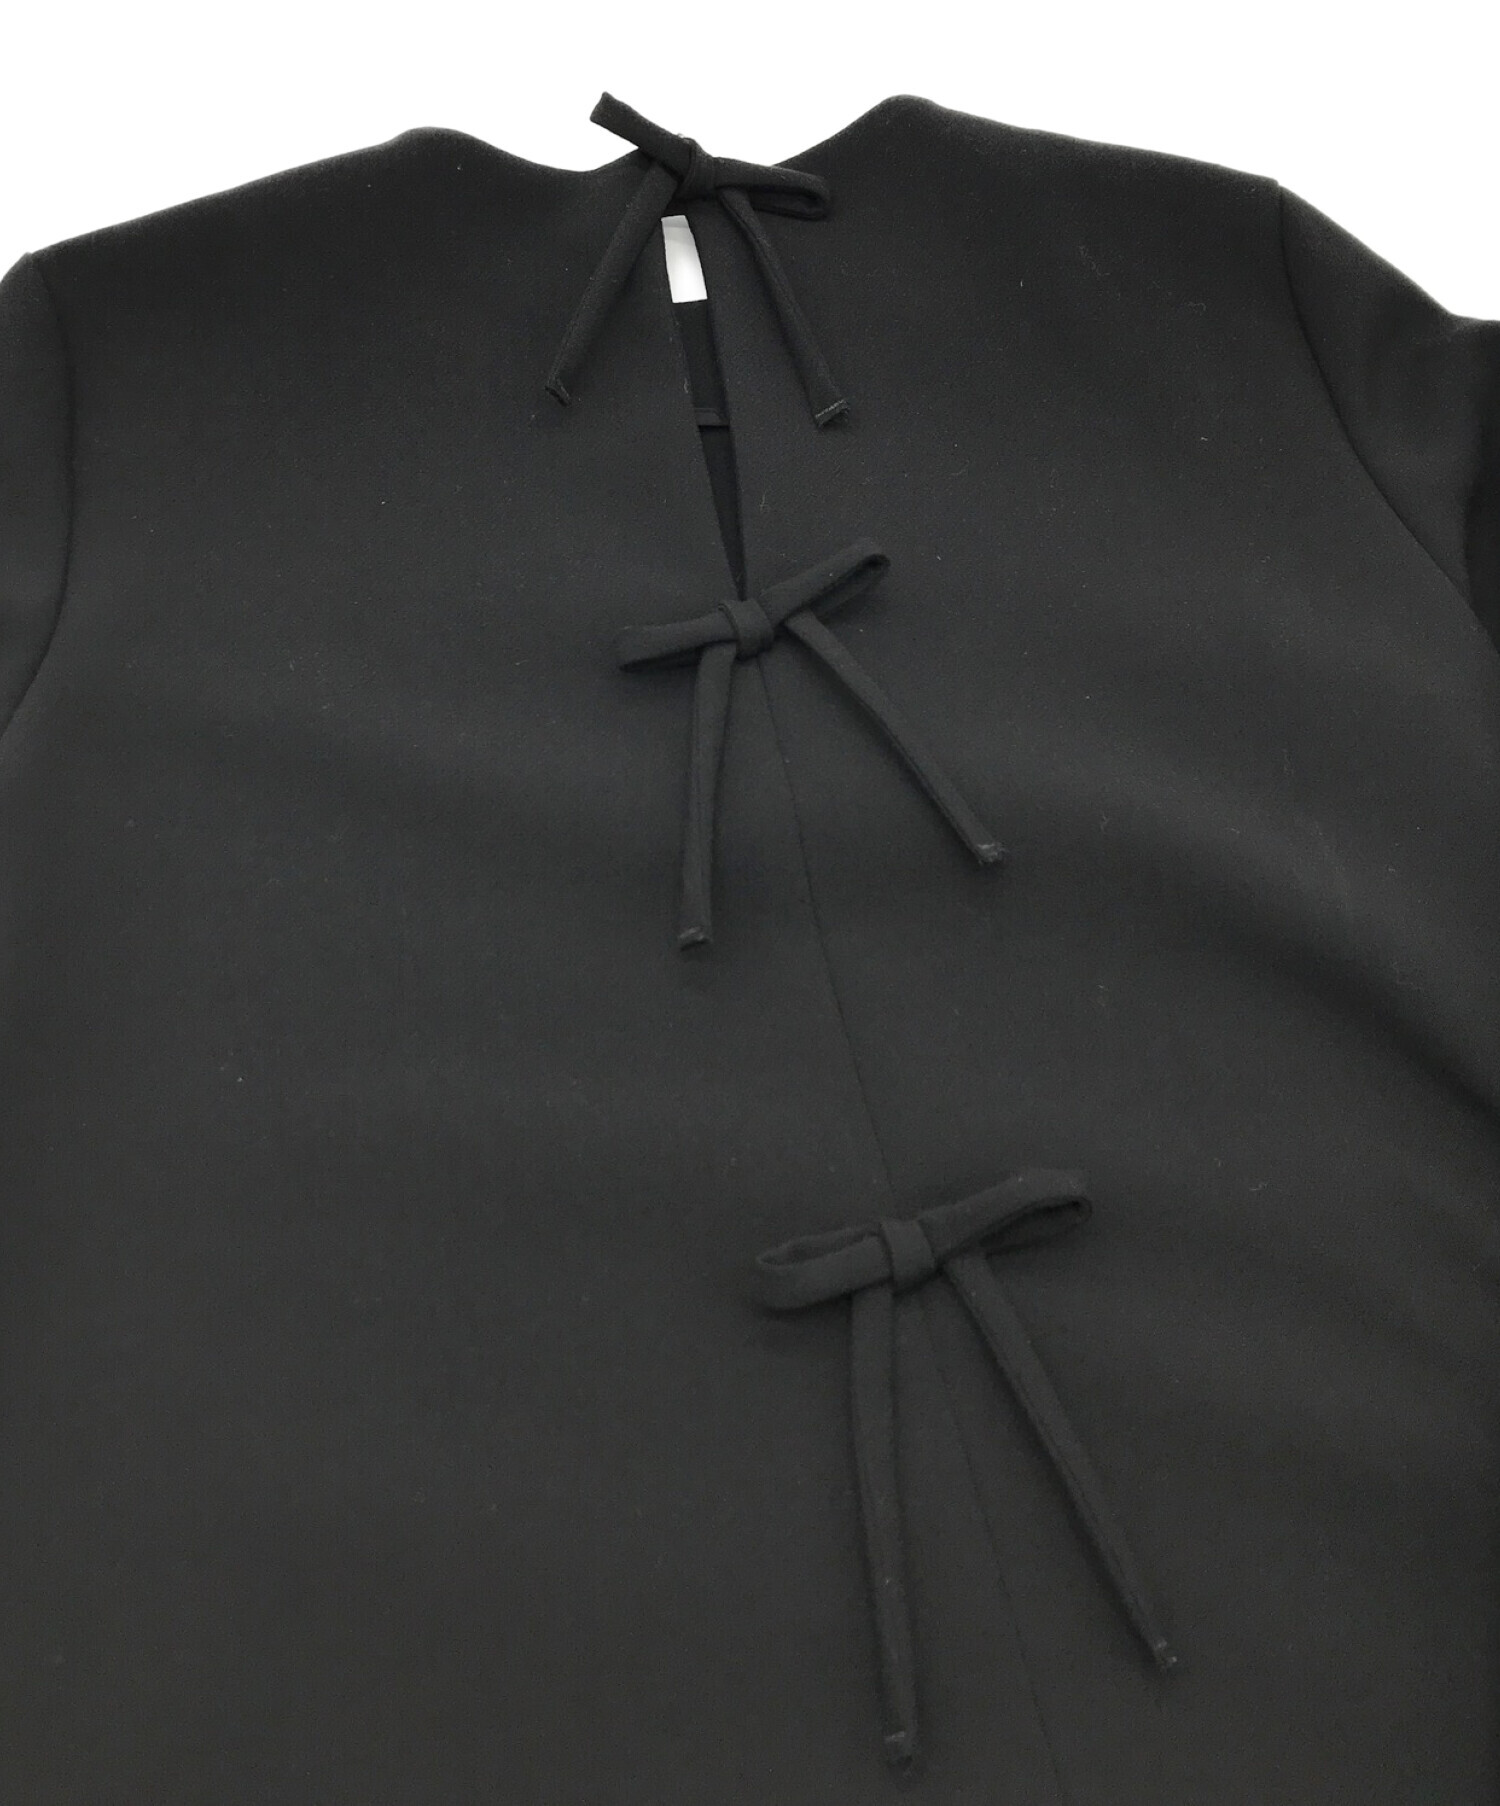 YOKO CHAN (ヨーコチャン) Long-sleeve Ribbon Maxi Dress ワンピース ブラック サイズ:38